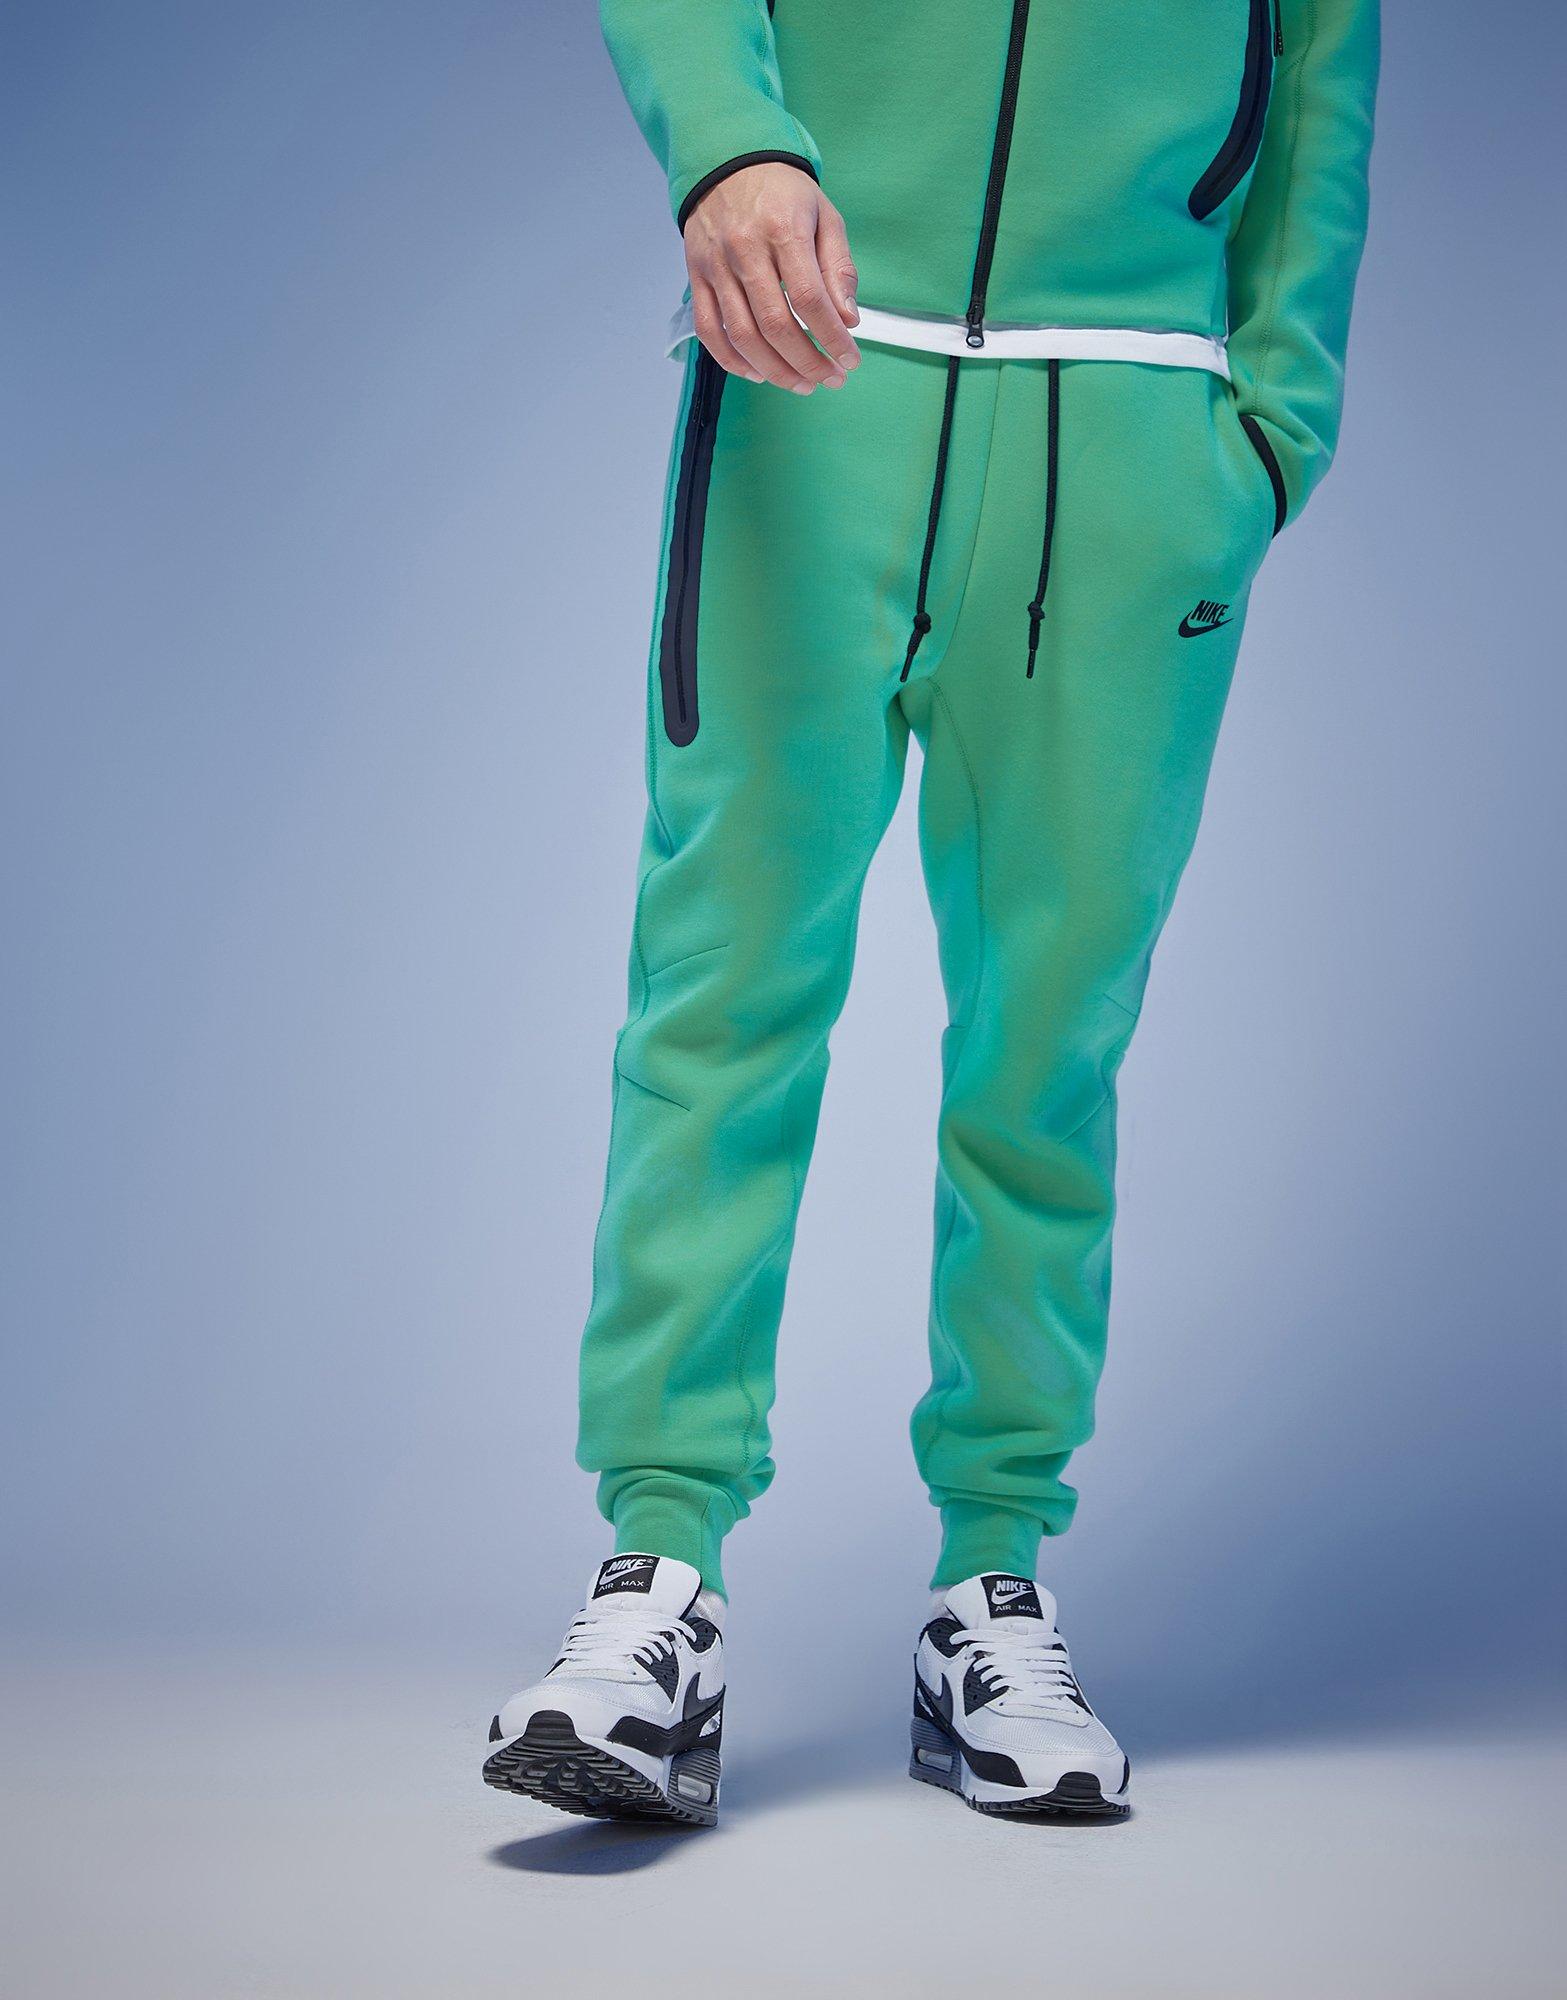 Nike fleece flare joggers and sweatshirt in Teal - Depop